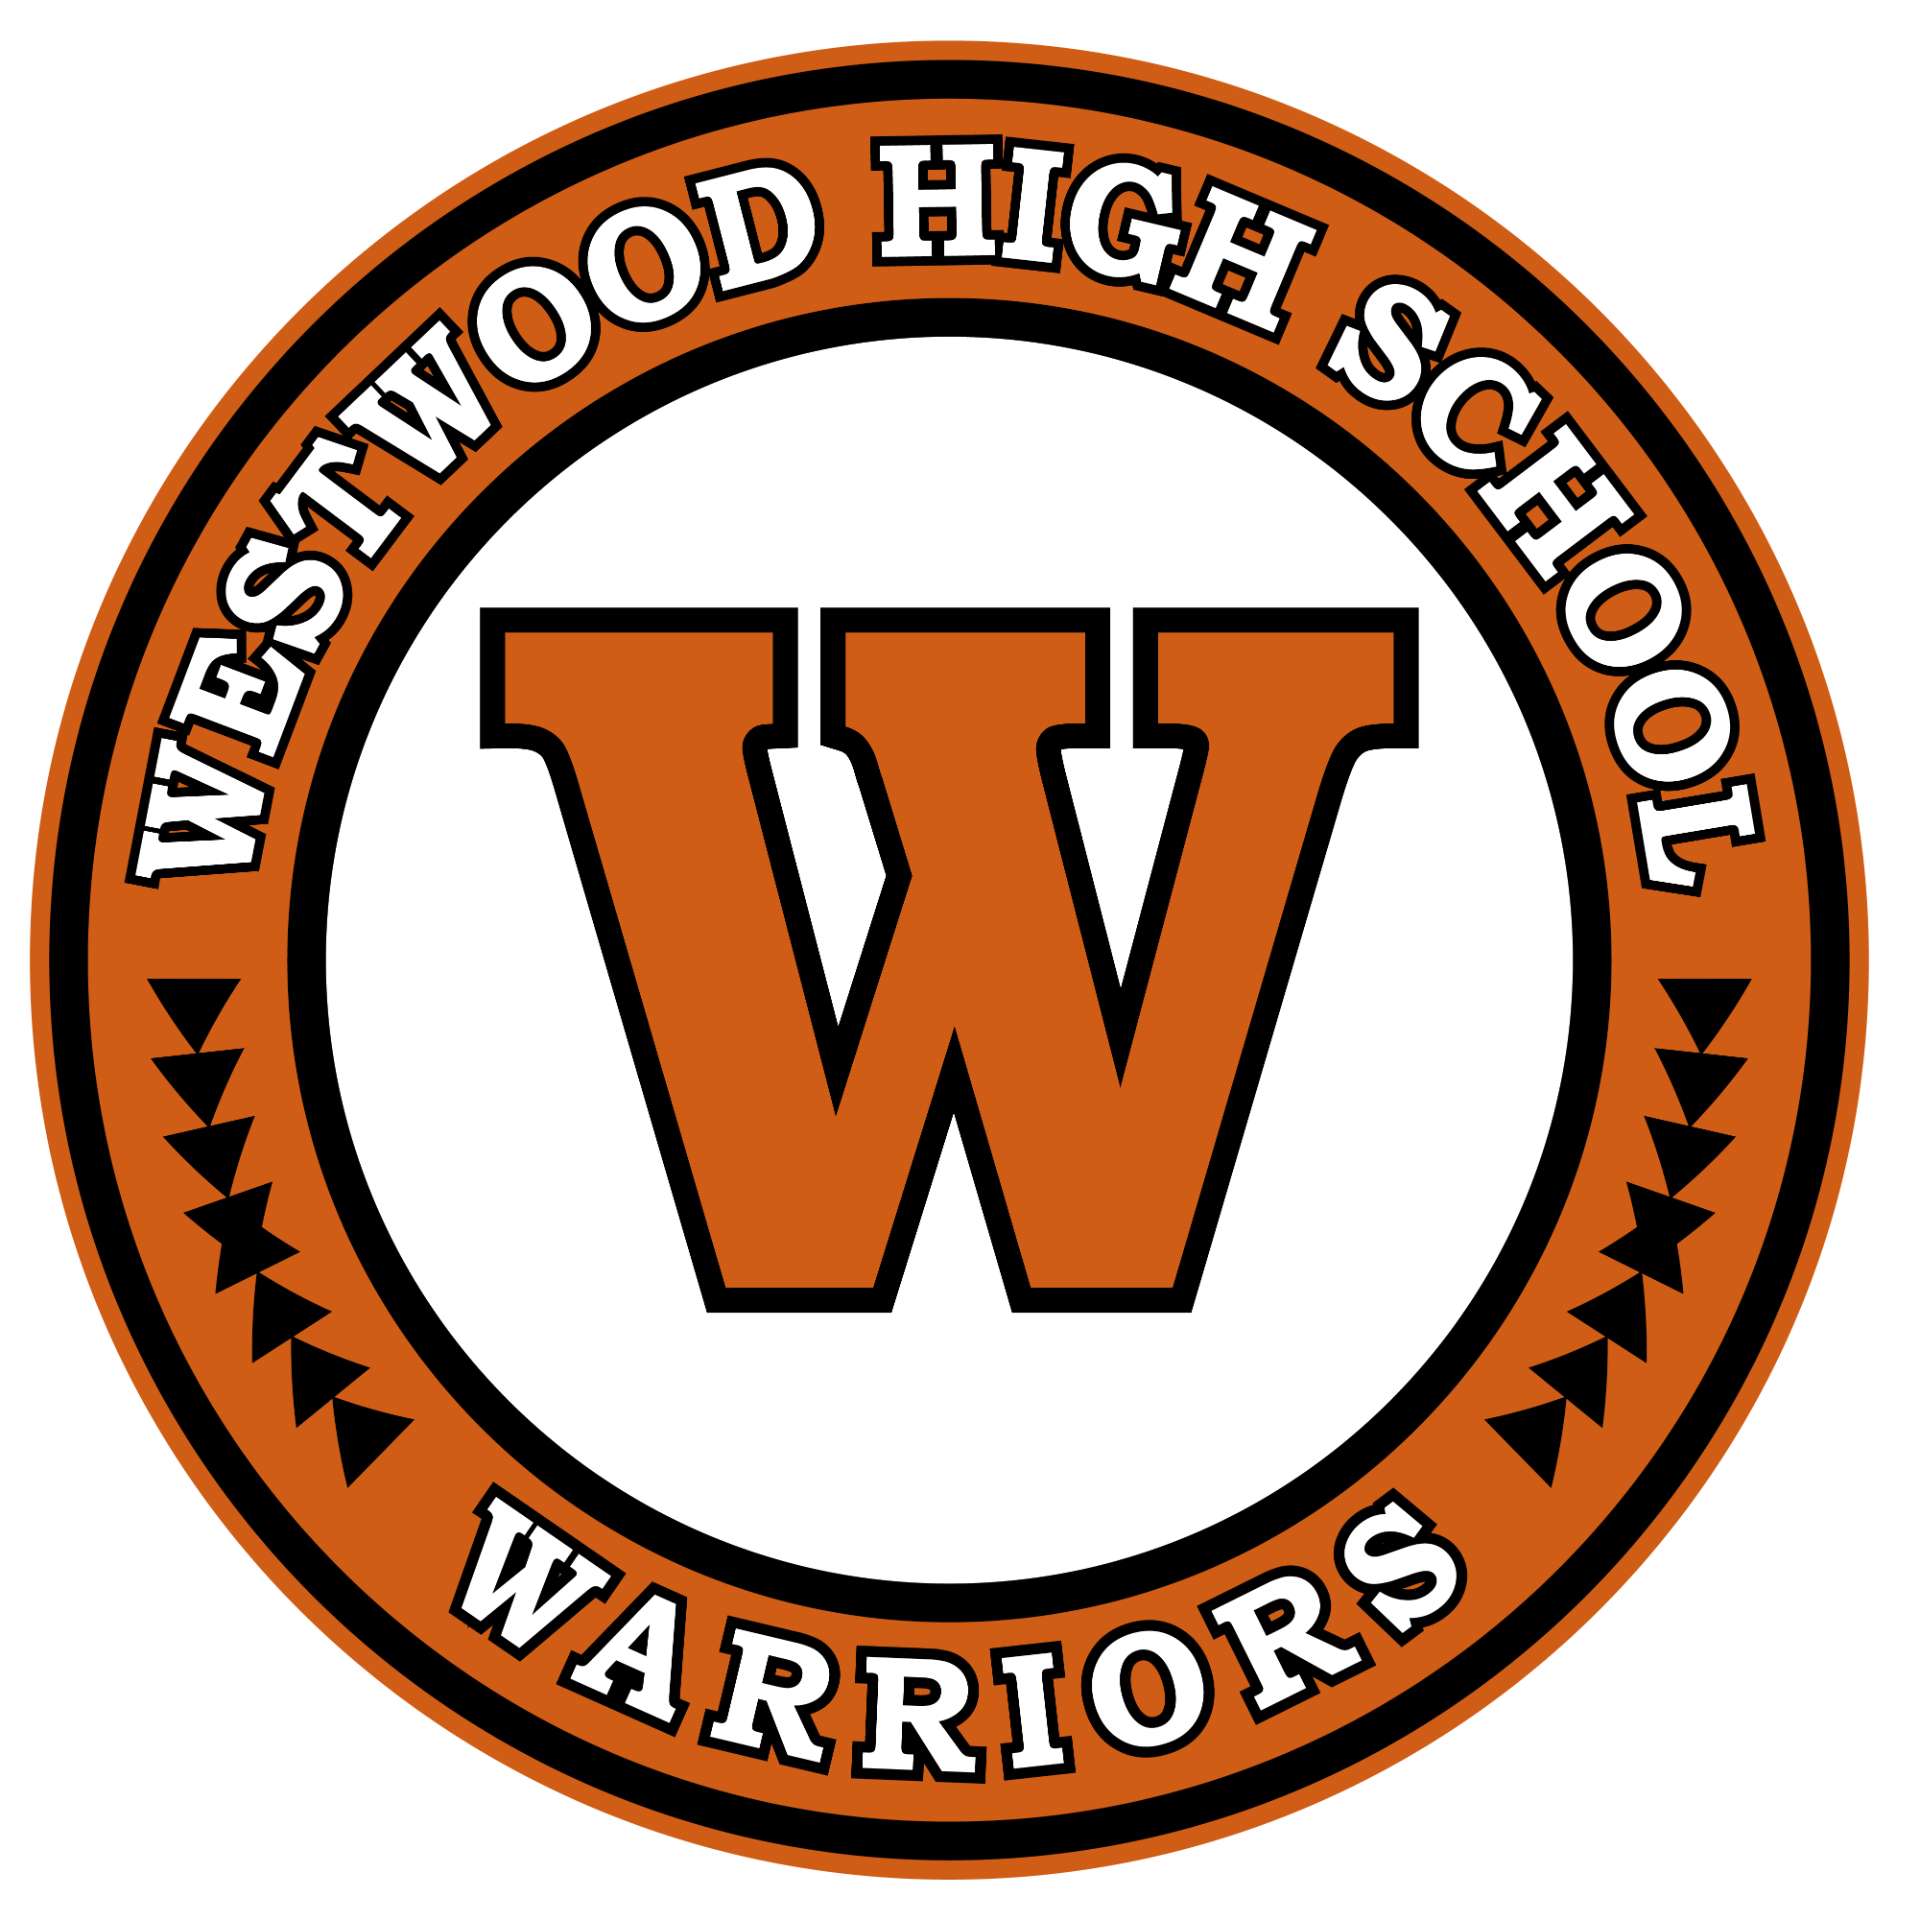 Westwood High School - Round Rock ISD